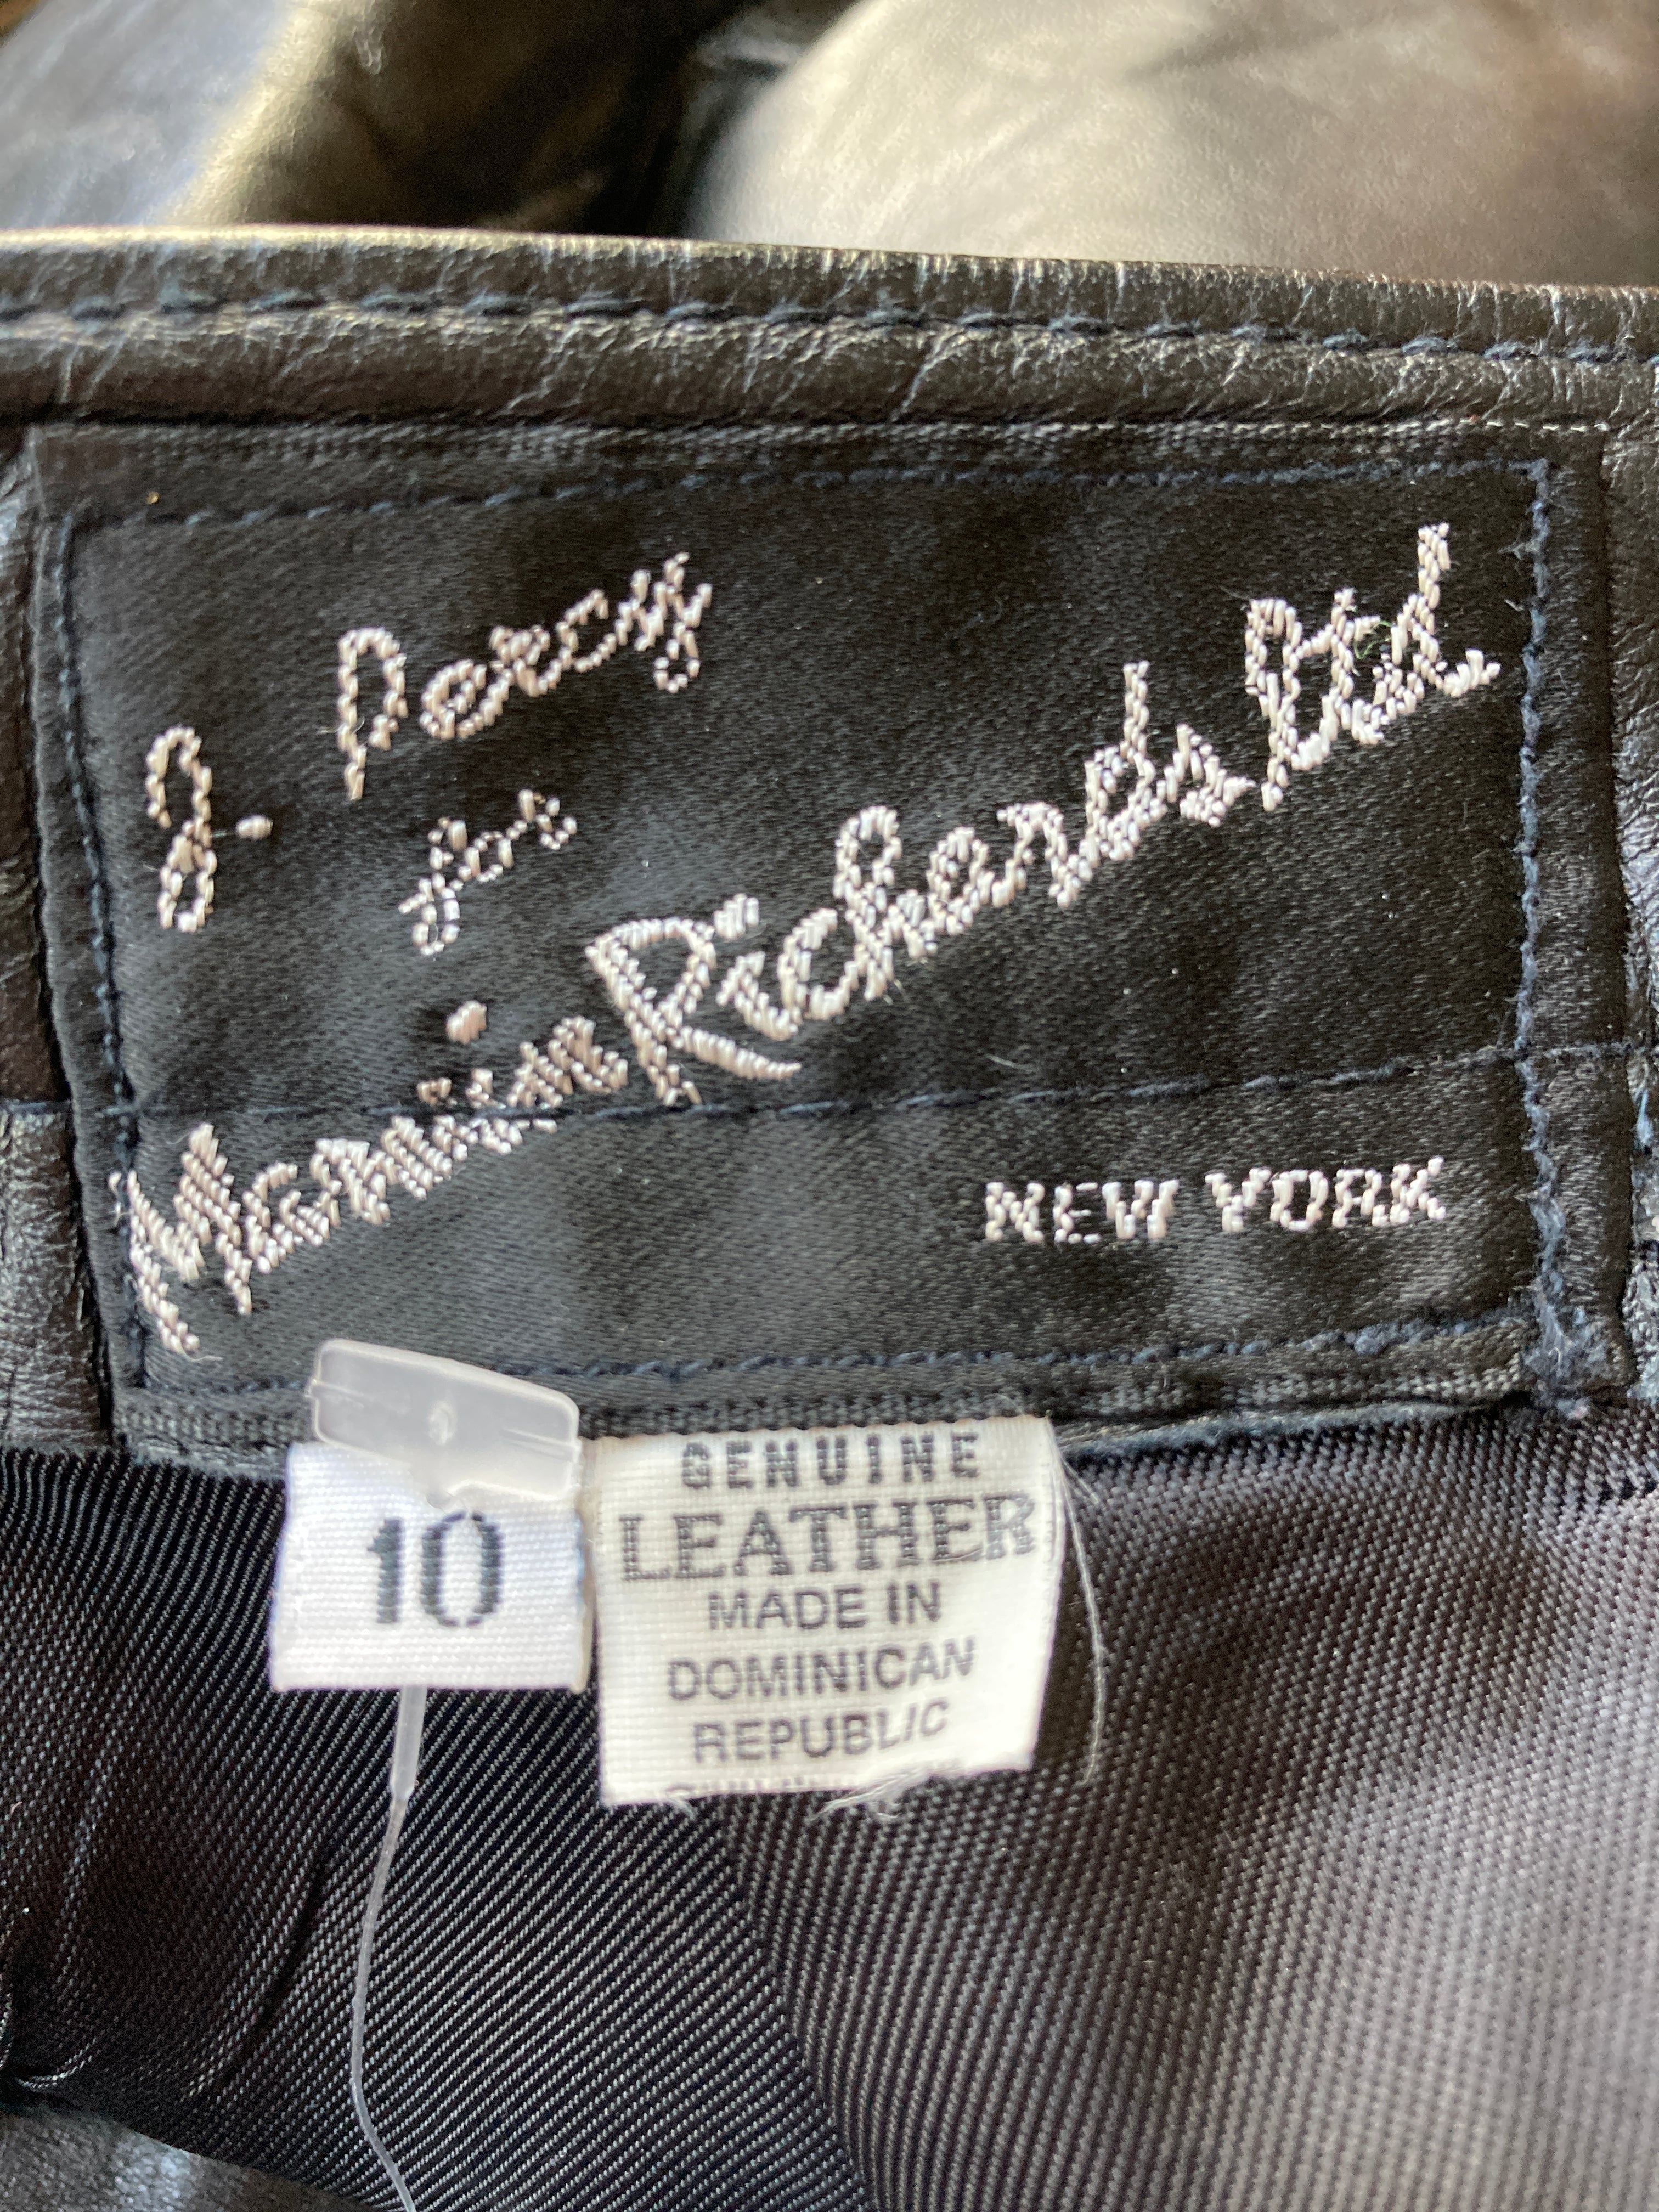 Vintage J. Percy for Marvin Richards Black Leather Skirt, 10